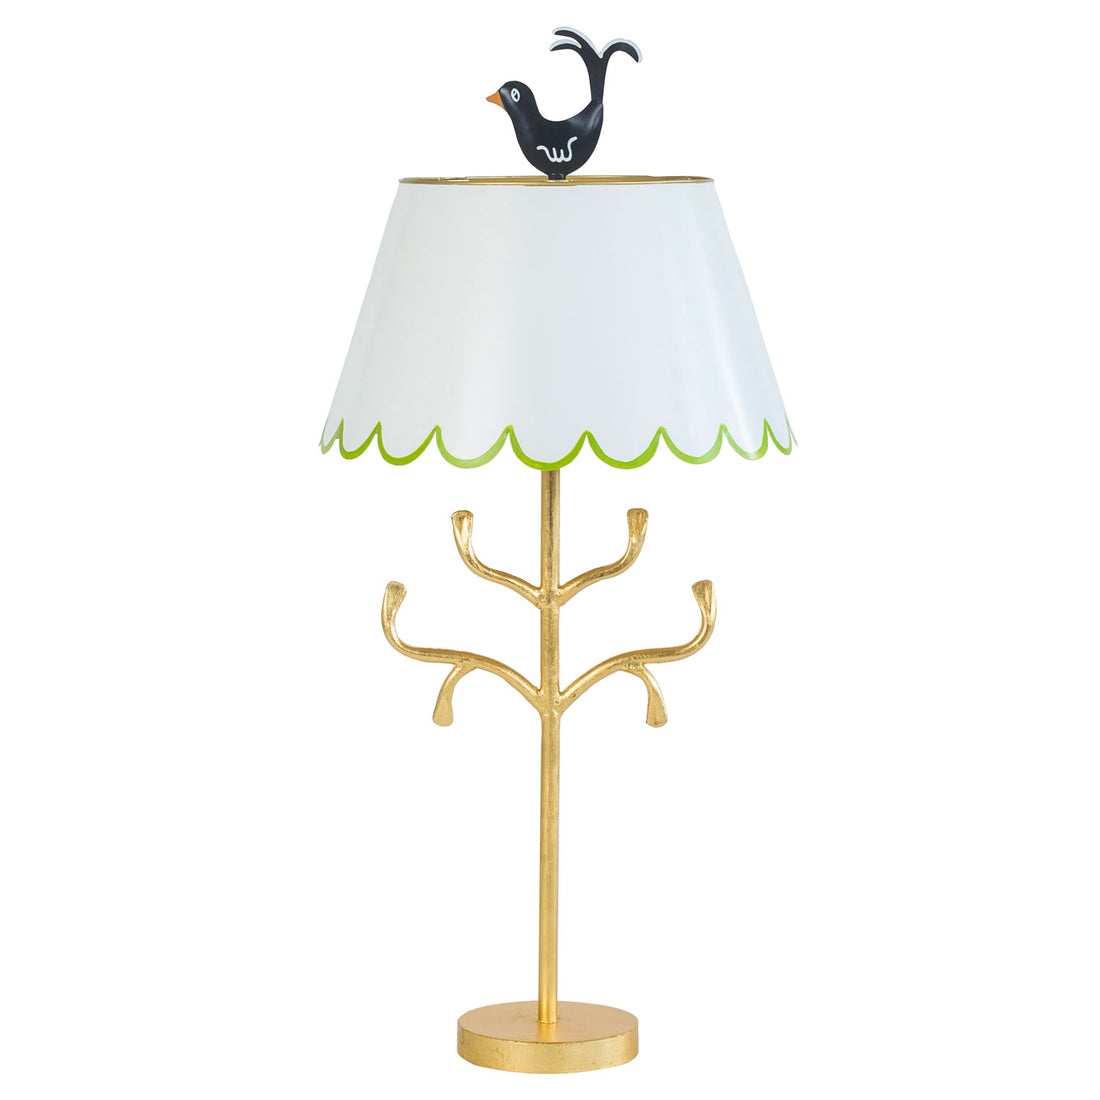 toleware lamp, white scallop edge shade, green trim, black bird finial, gold iron base